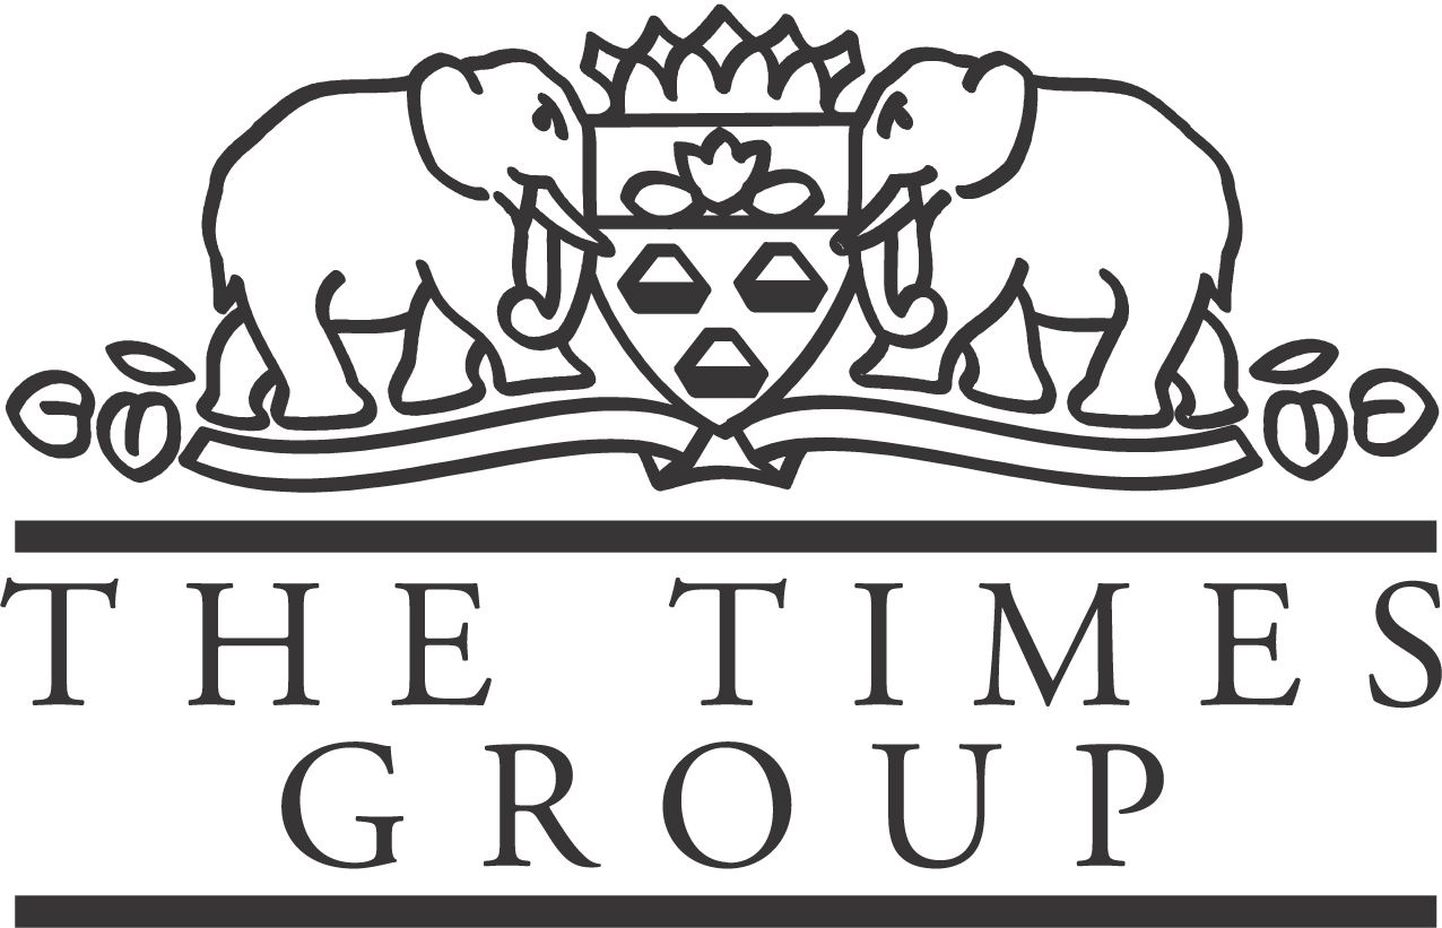 The Times of India Groupi logo.